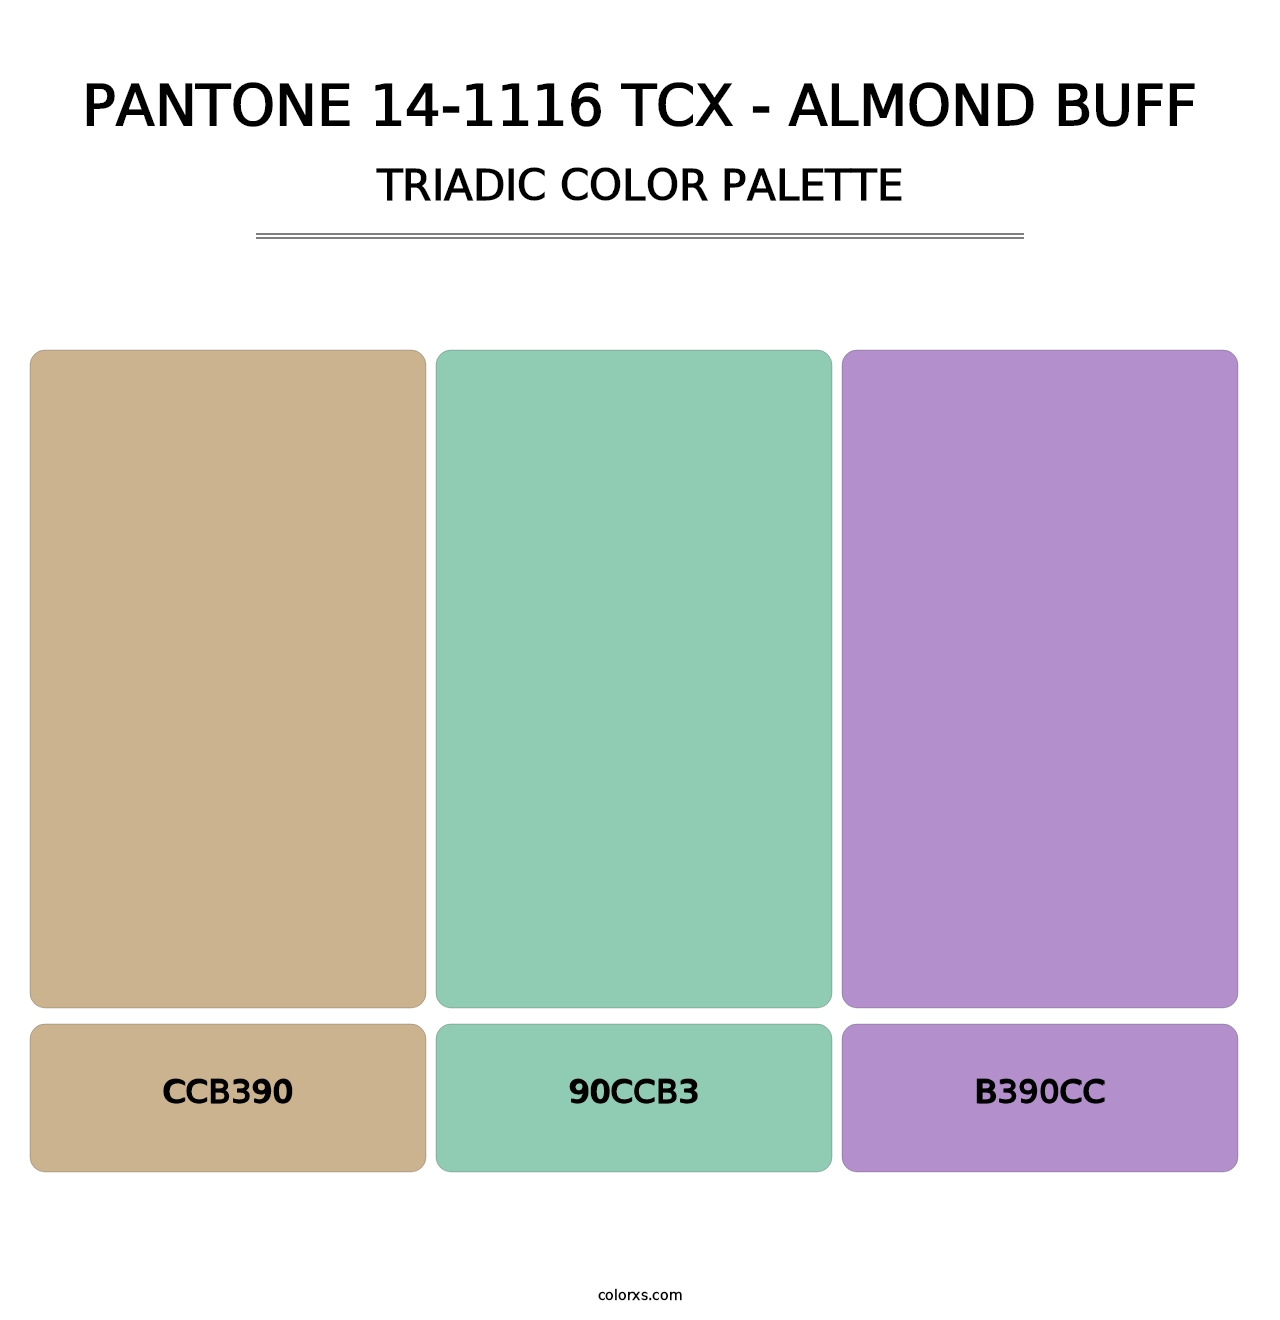 PANTONE 14-1116 TCX - Almond Buff - Triadic Color Palette